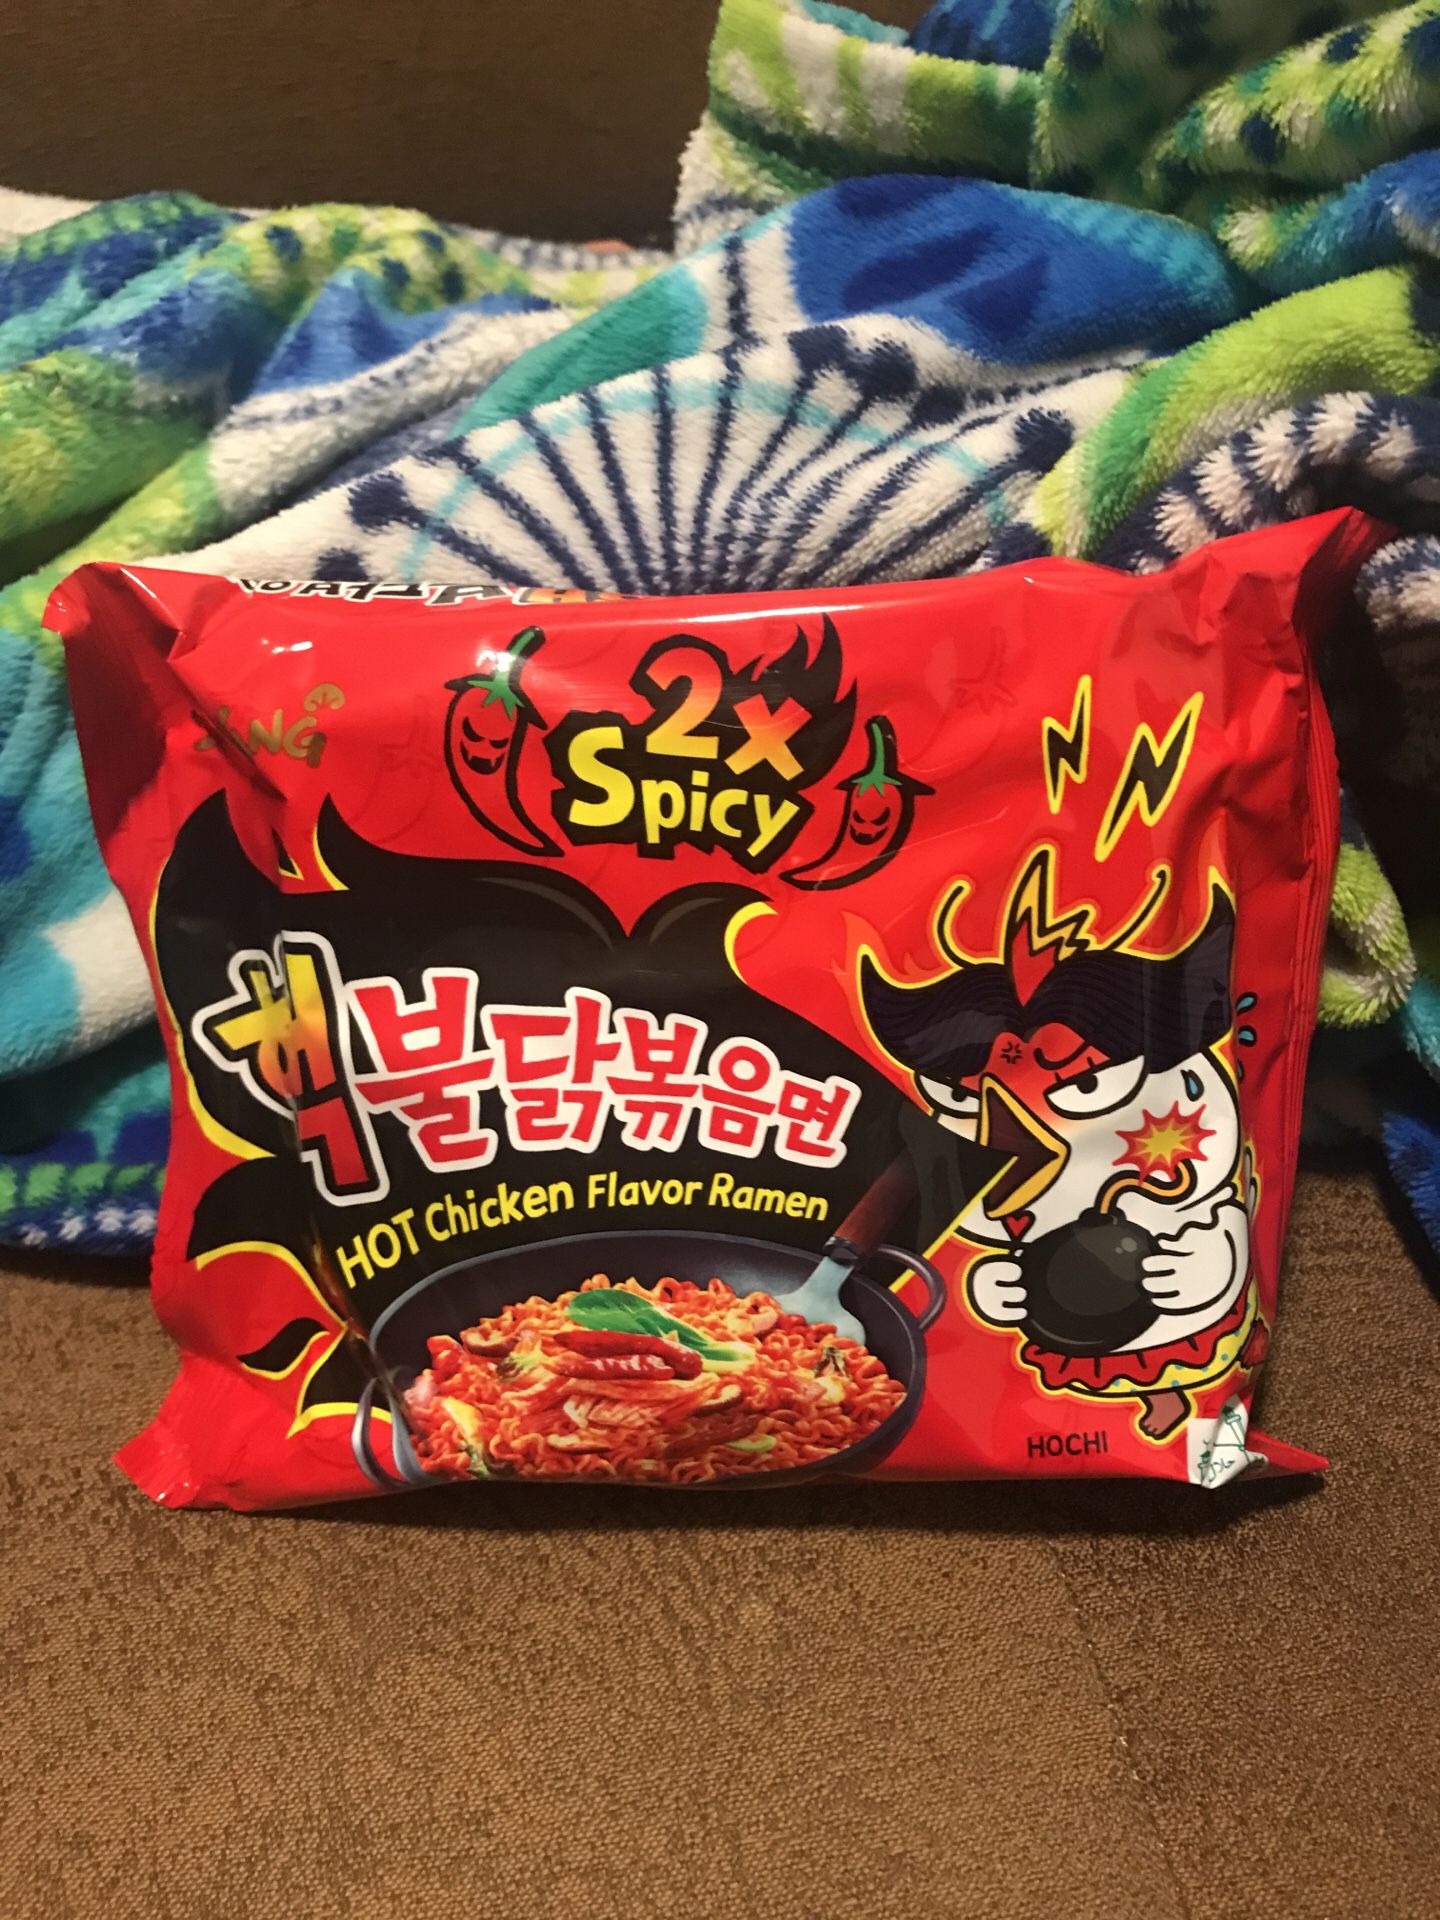 2x spicy noodles